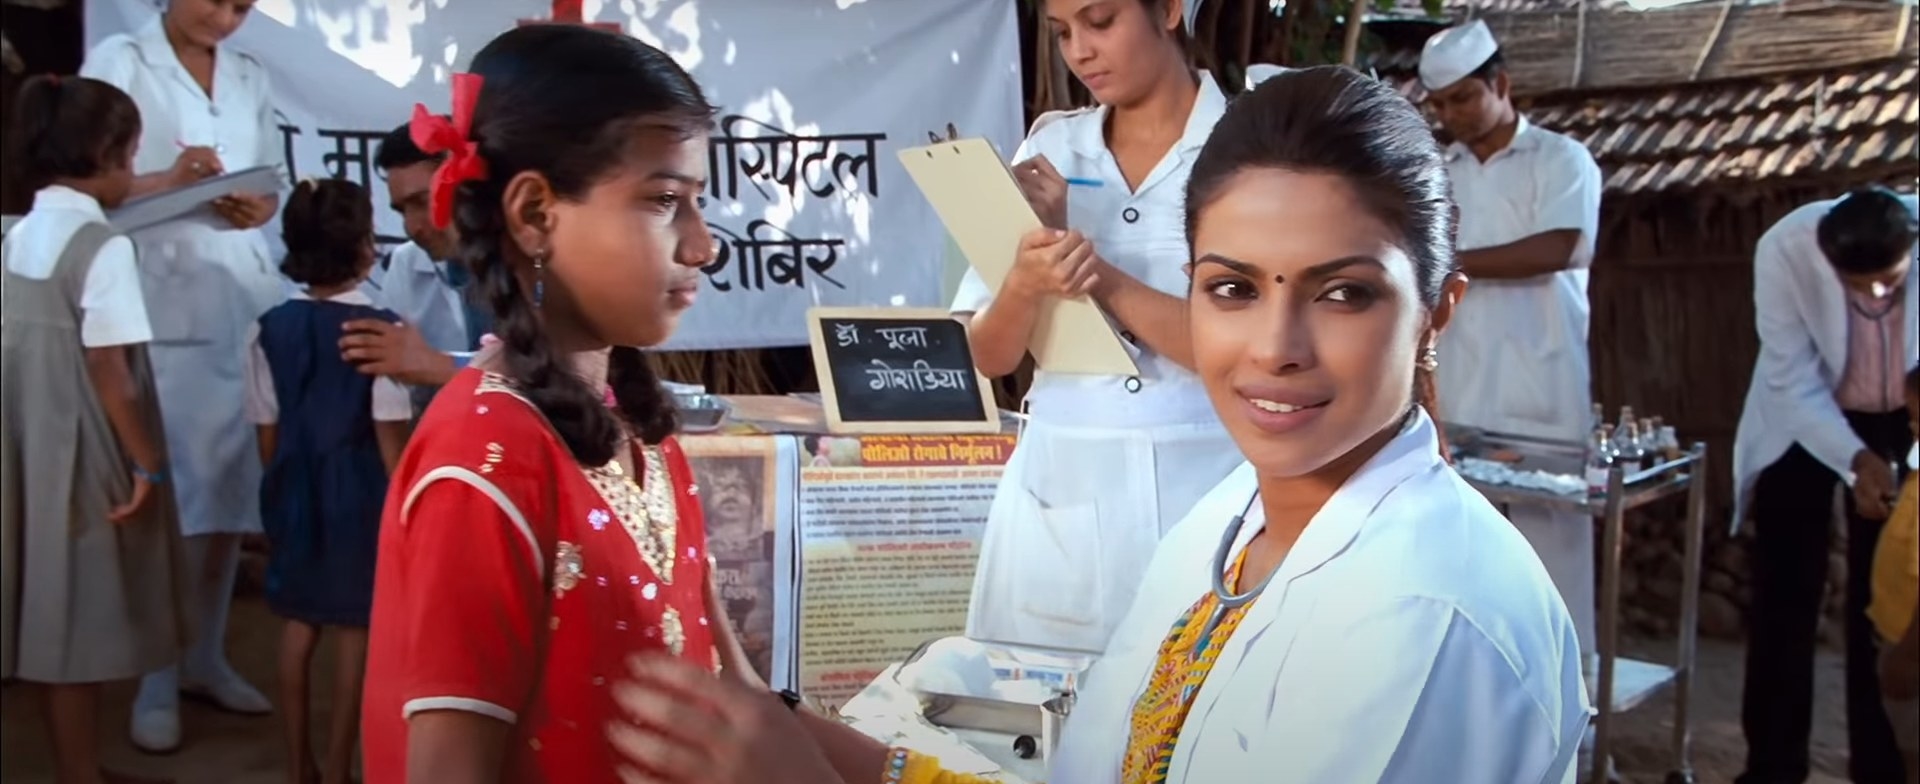 Priyanka Chopra dressed as a doctor